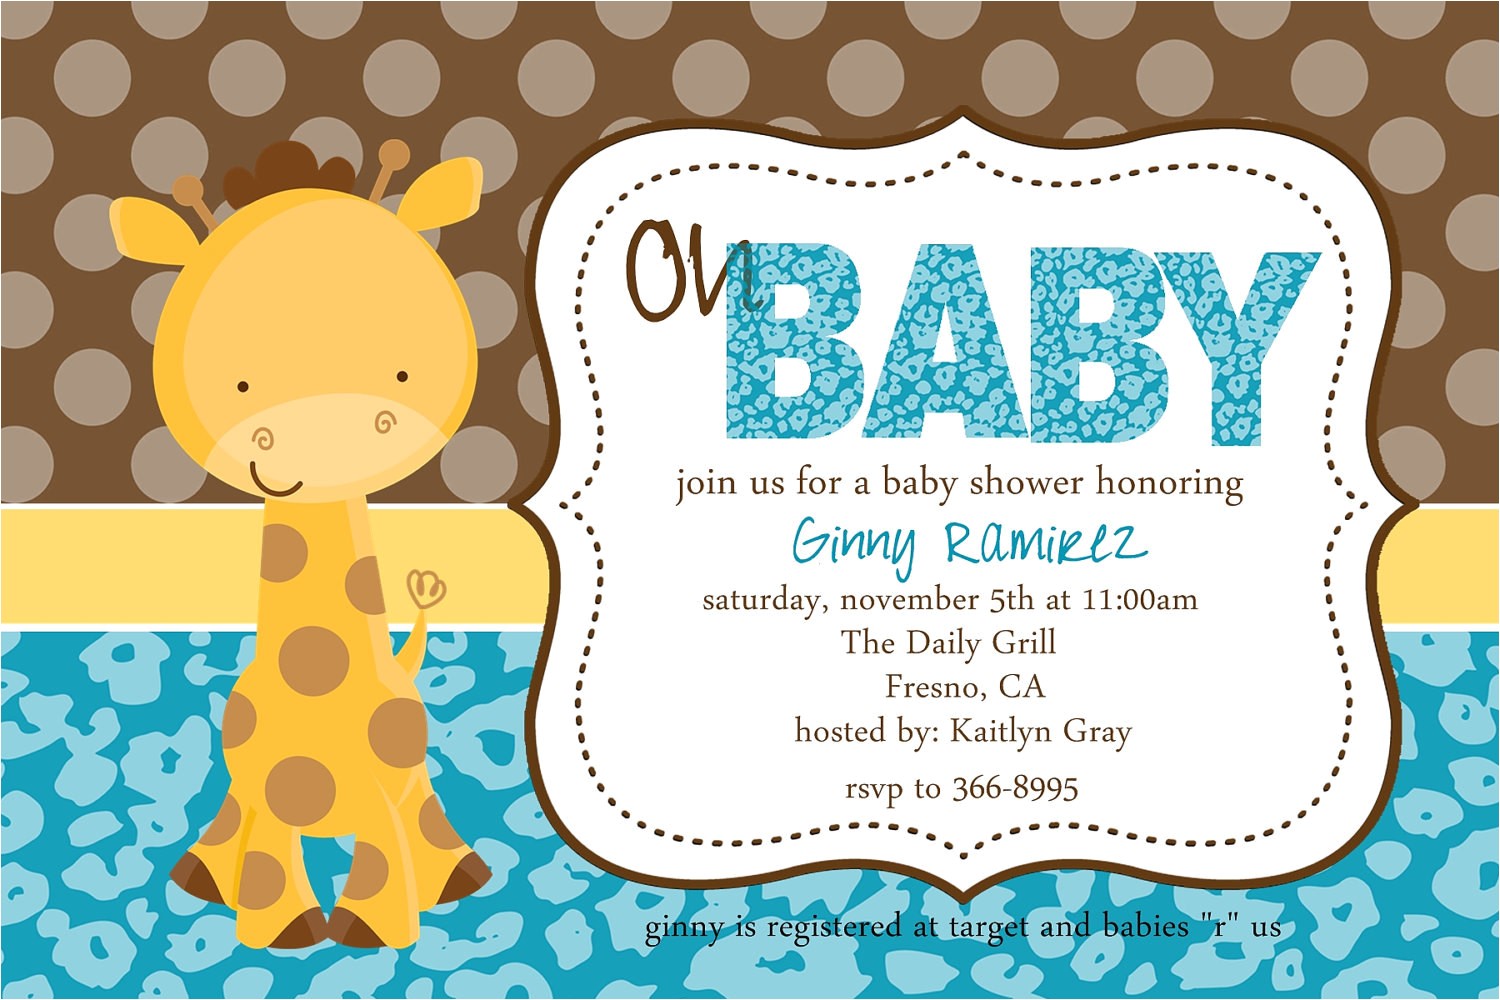 Giraffe Baby Shower Invites Baby Giraffe Baby Shower Invitation